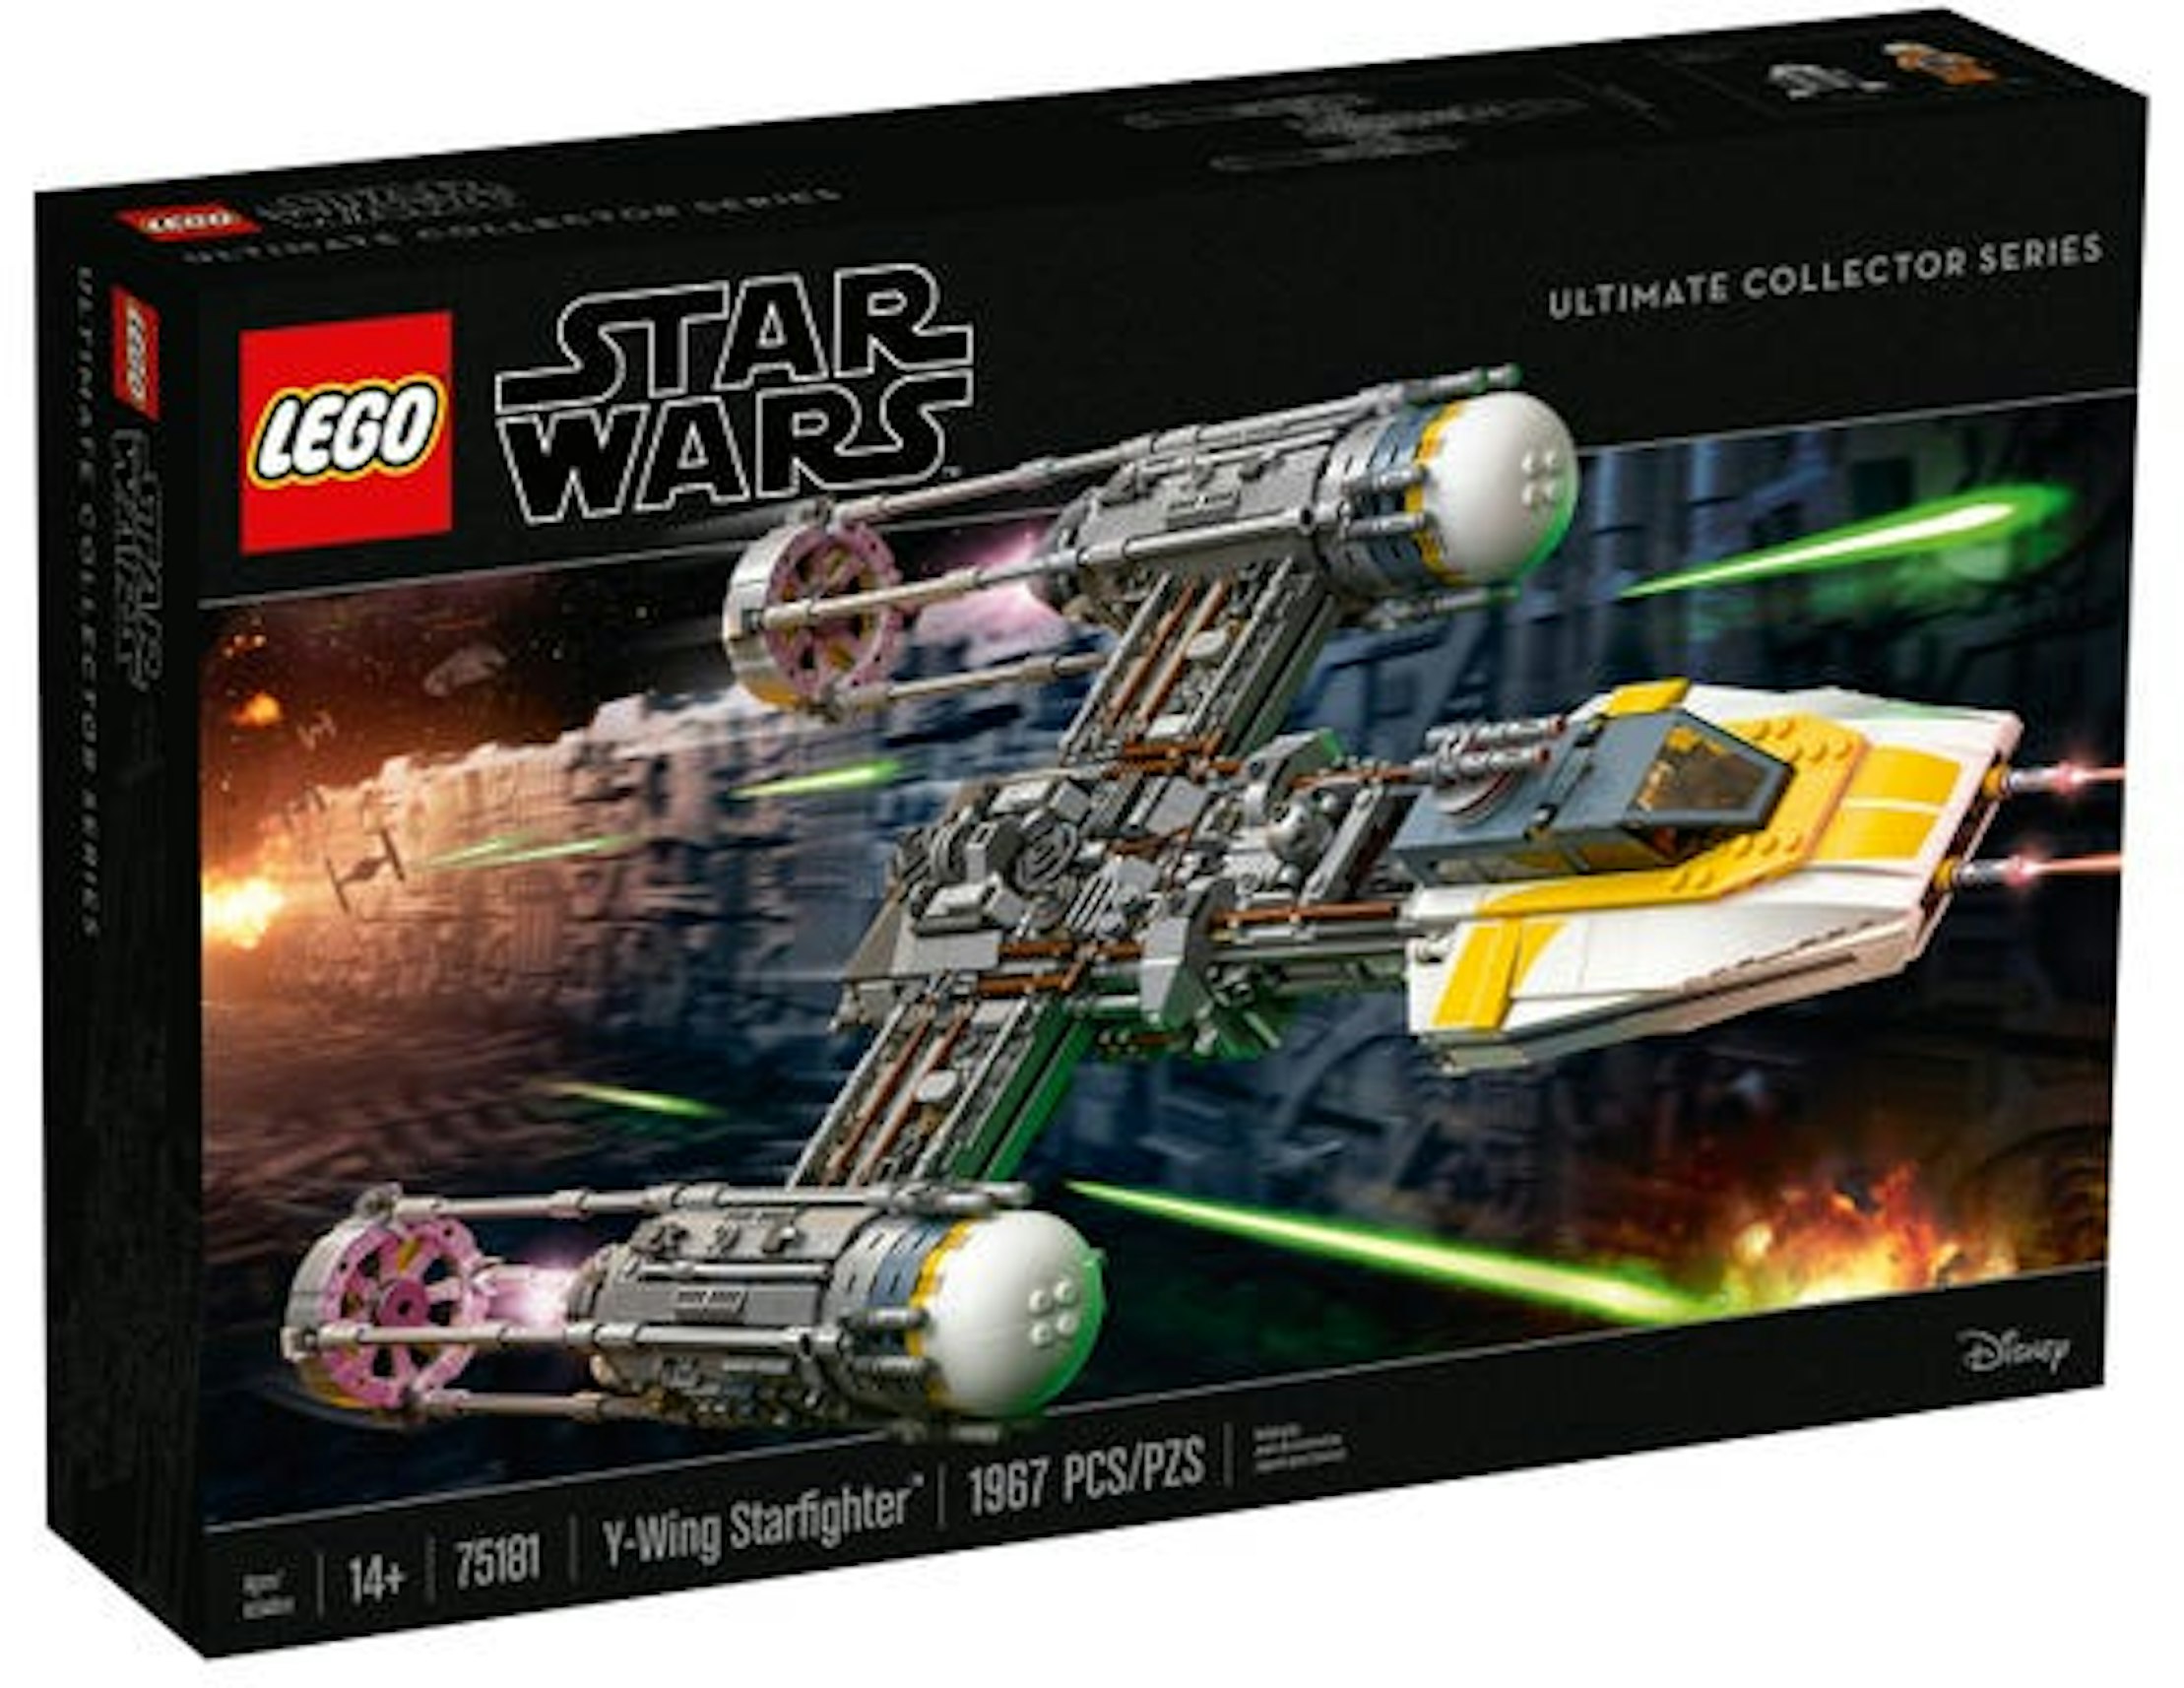 LEGO Star Wars Ultimate Series Y-wing Starfighter Set - US